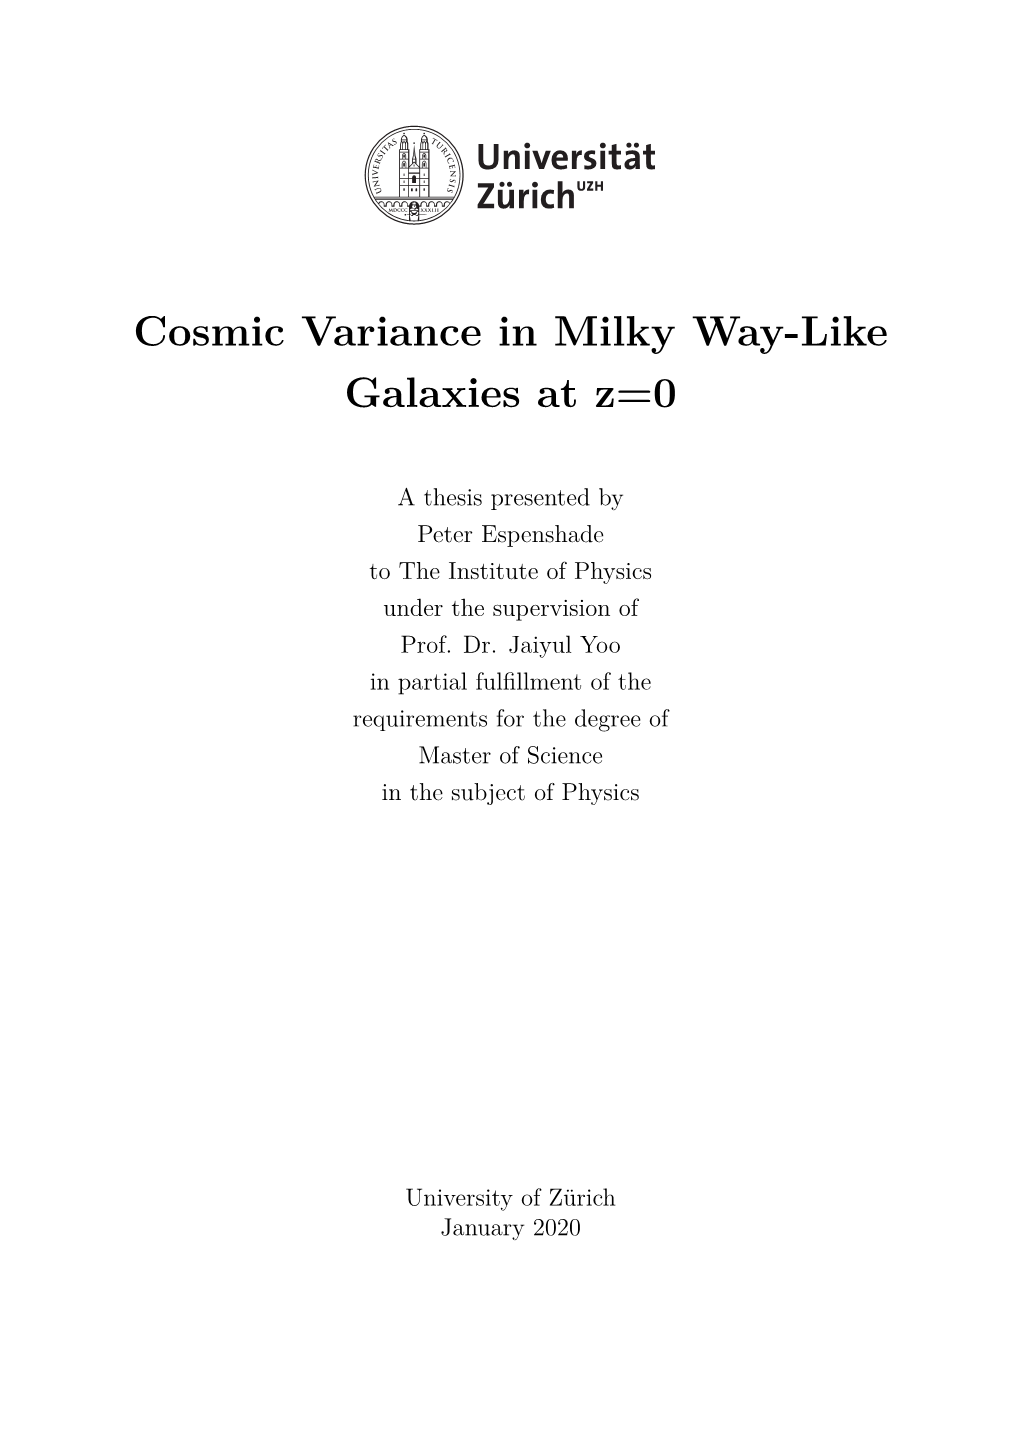 Cosmic Variance in Milky Way-Like Galaxies at Z=0, Espenshade